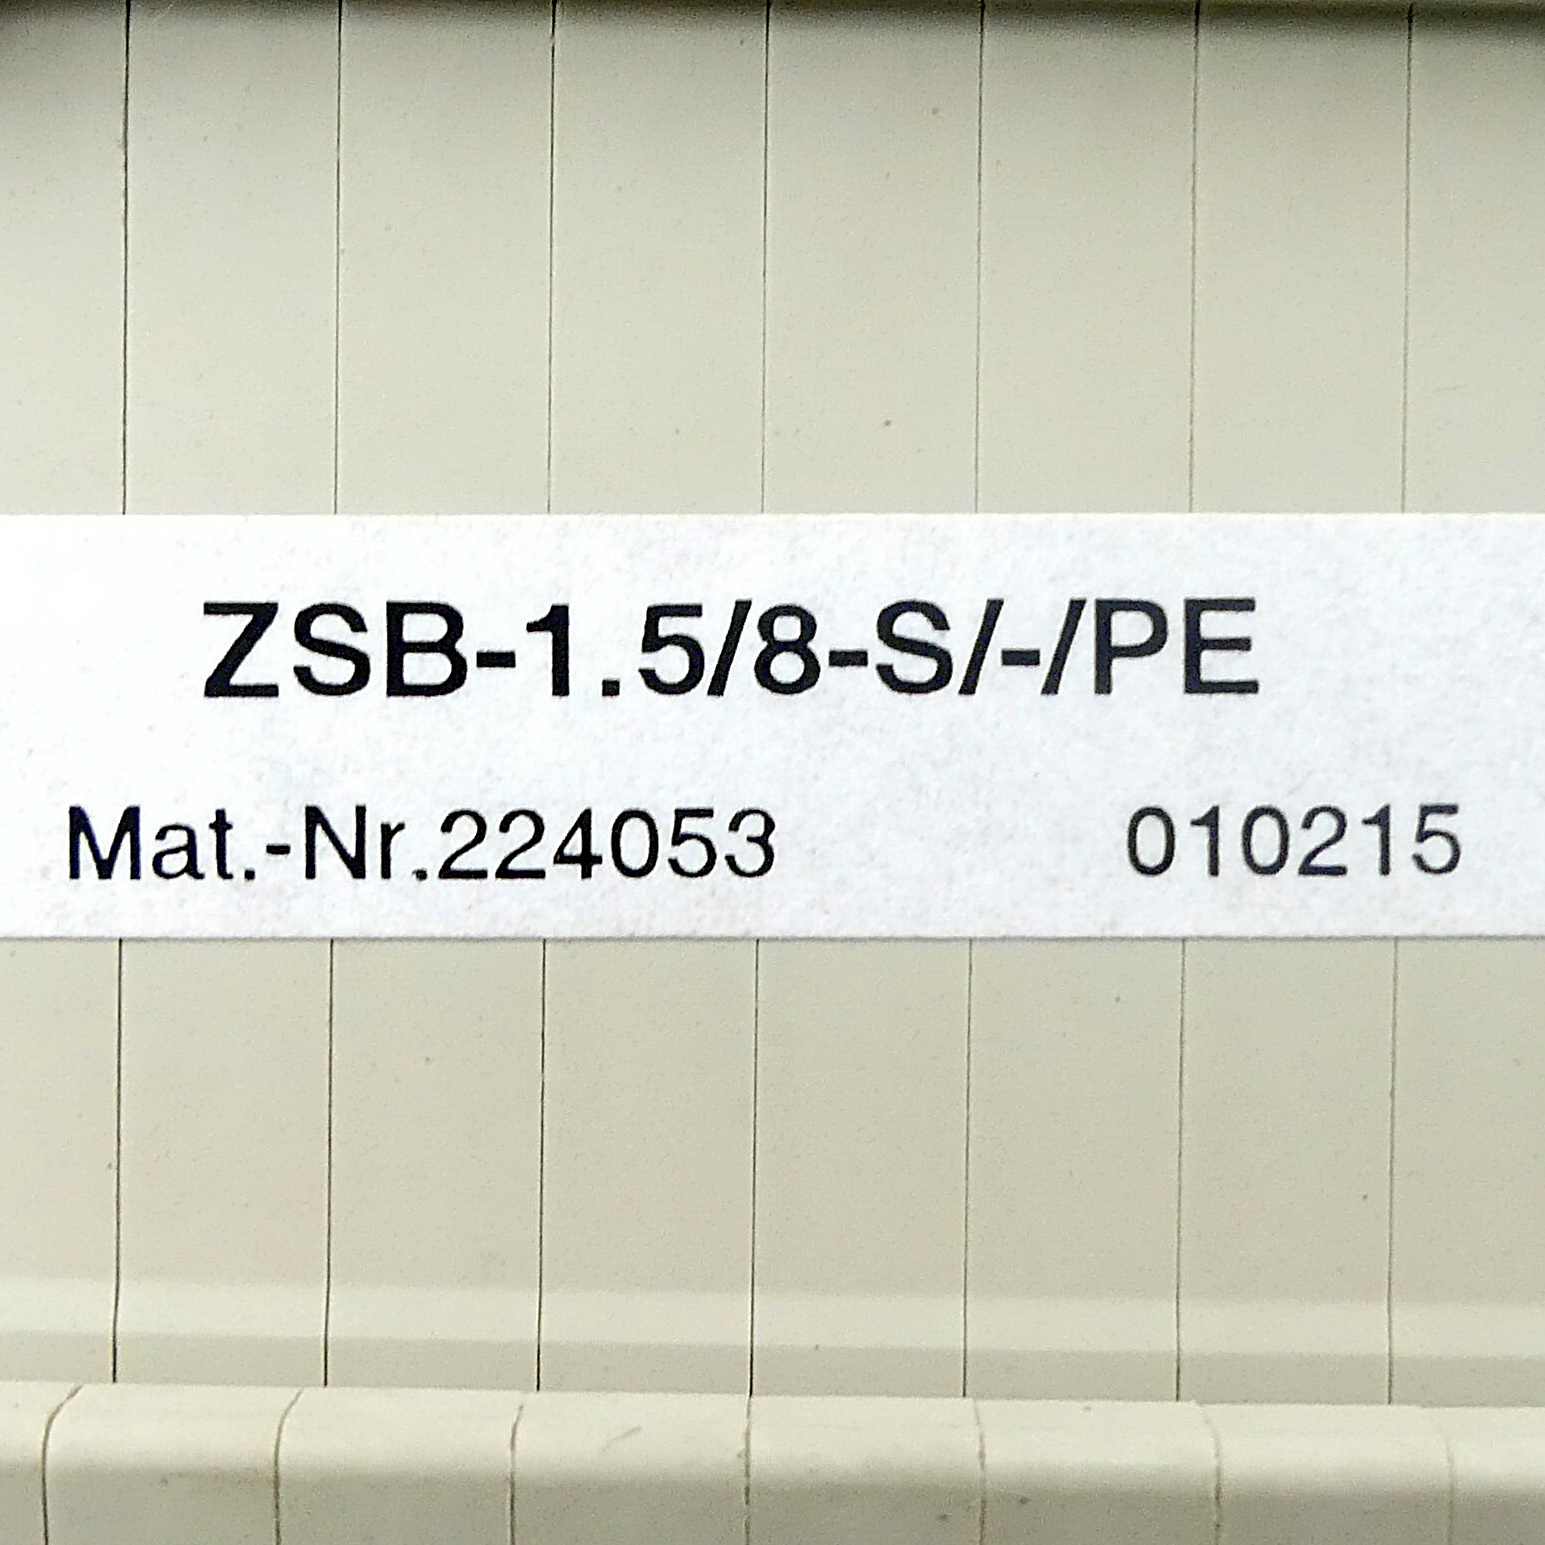 Anschlussblock ZSB-1.5/8-S/-/PE 